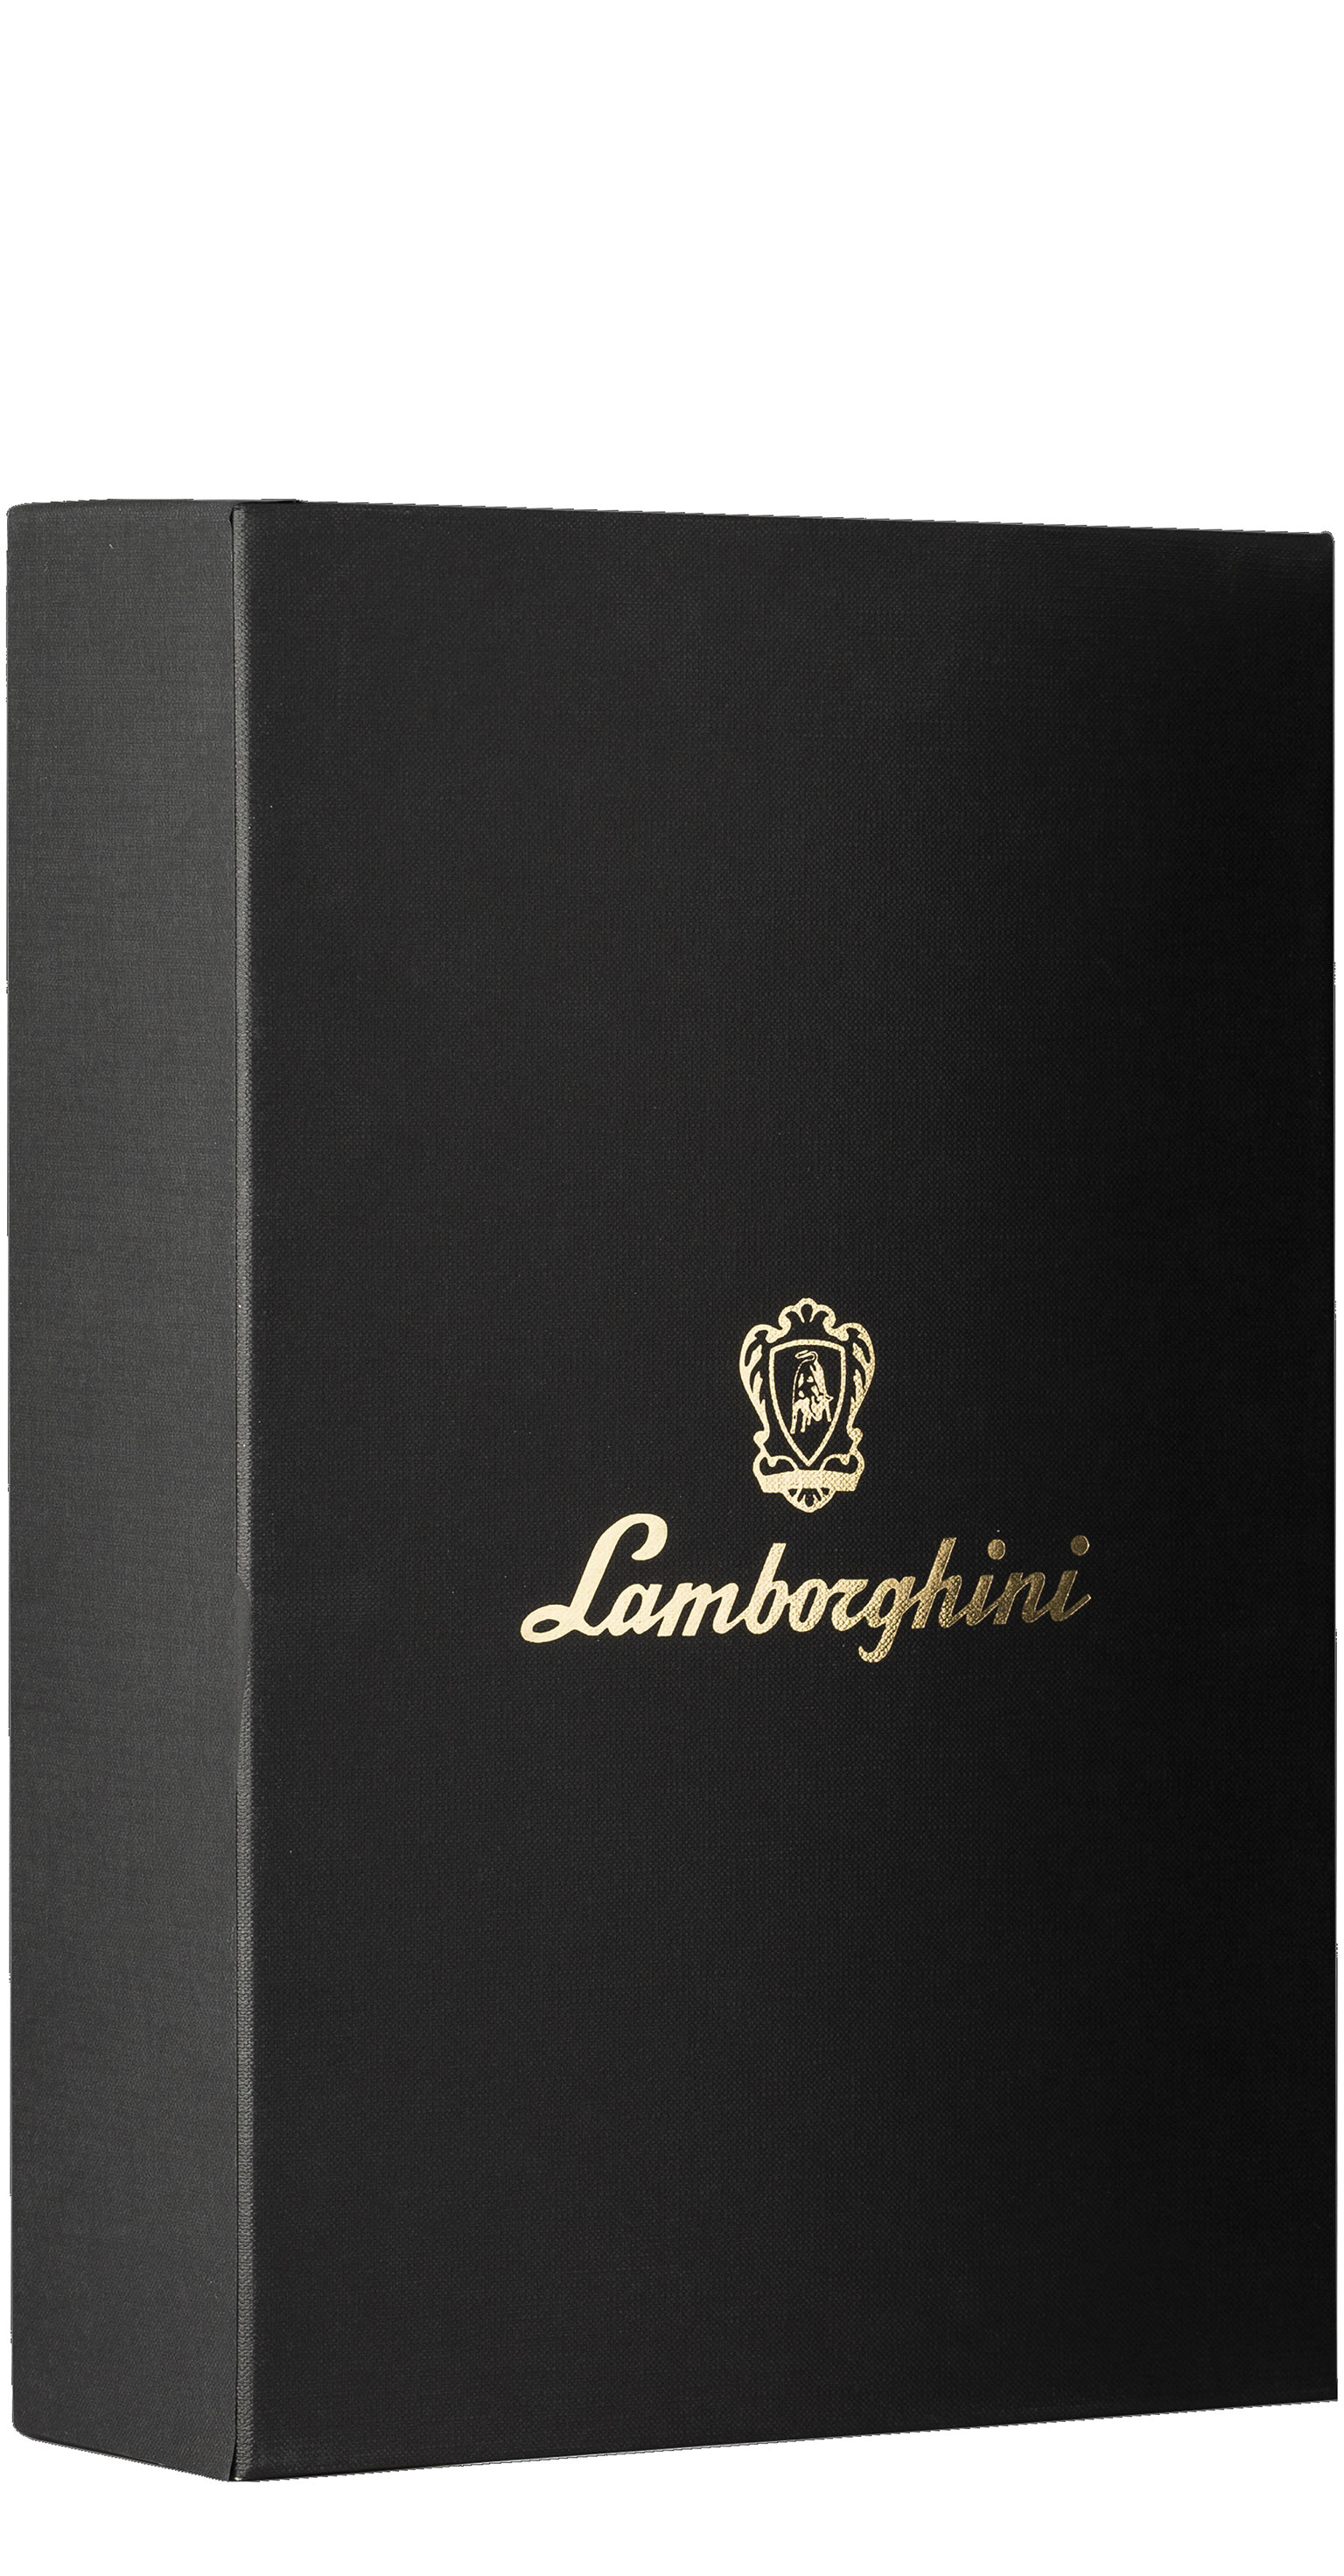 Lamborghini Tenuta - Black Gift Box de LUXE - for 2 Wine bottles (not ...